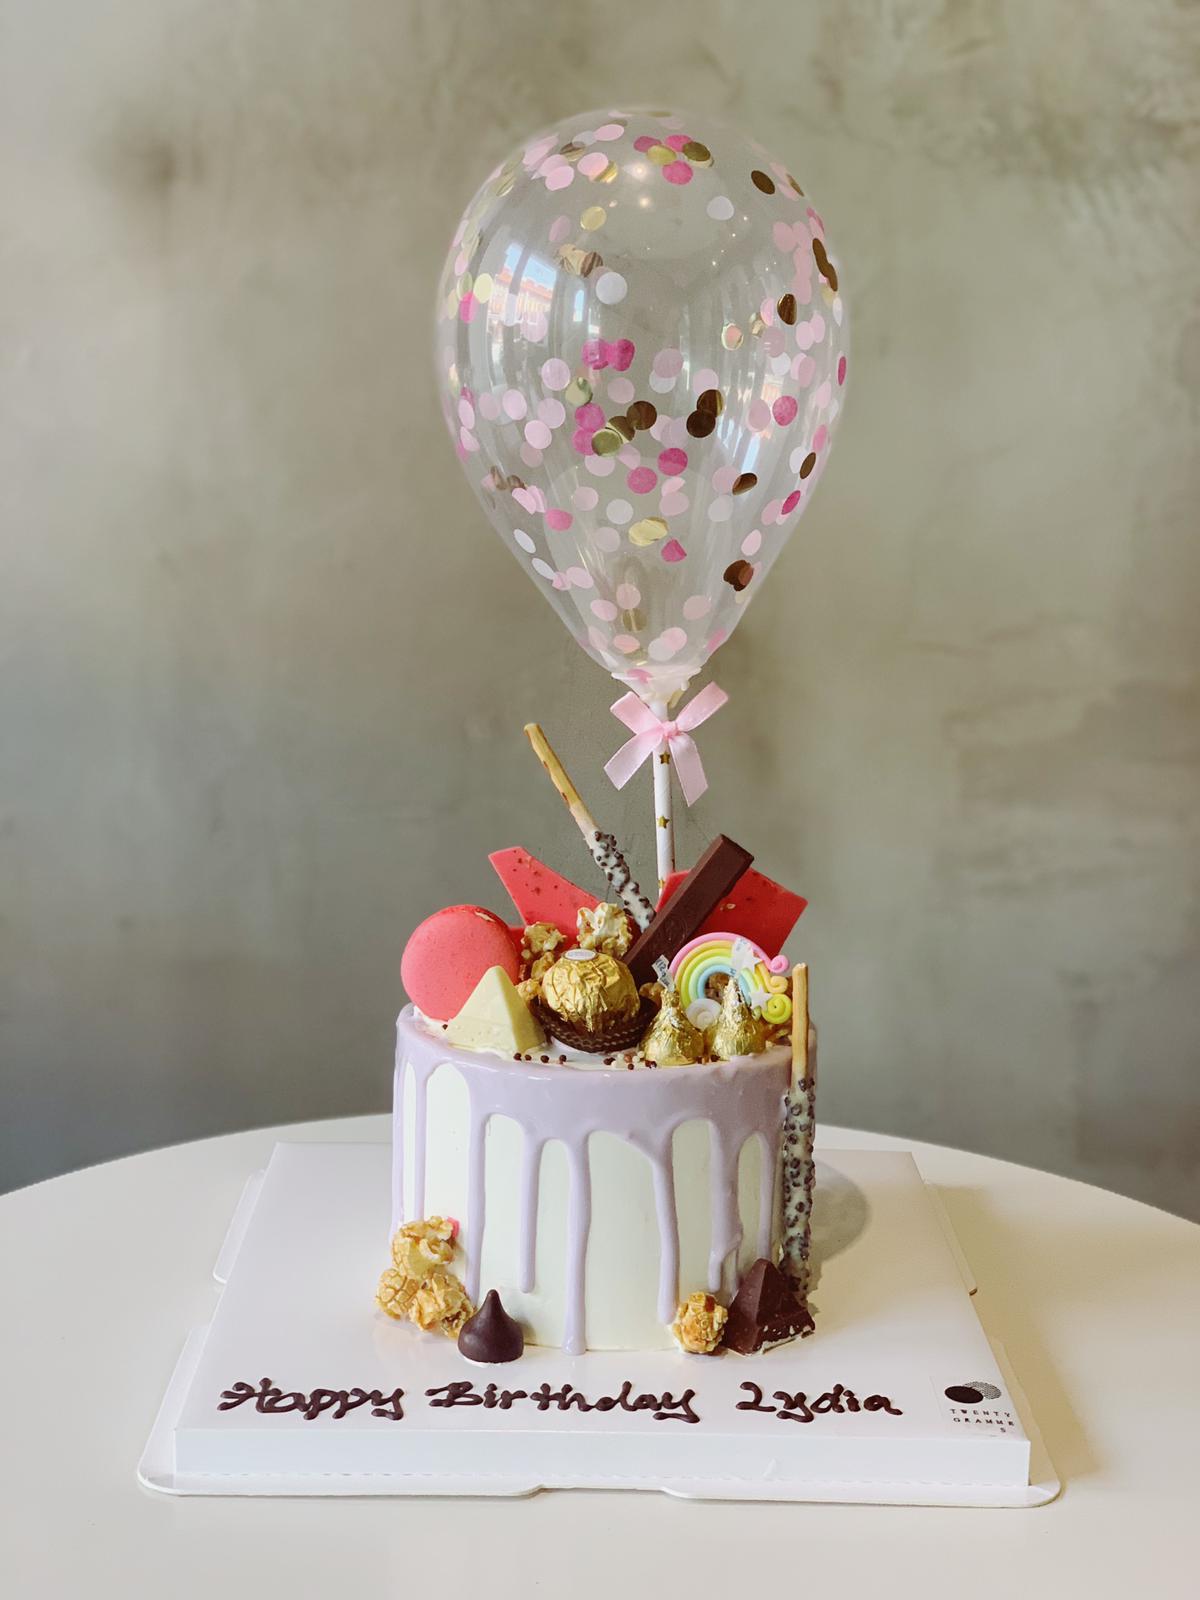 Balloon 09 Happy Birthday with Cake